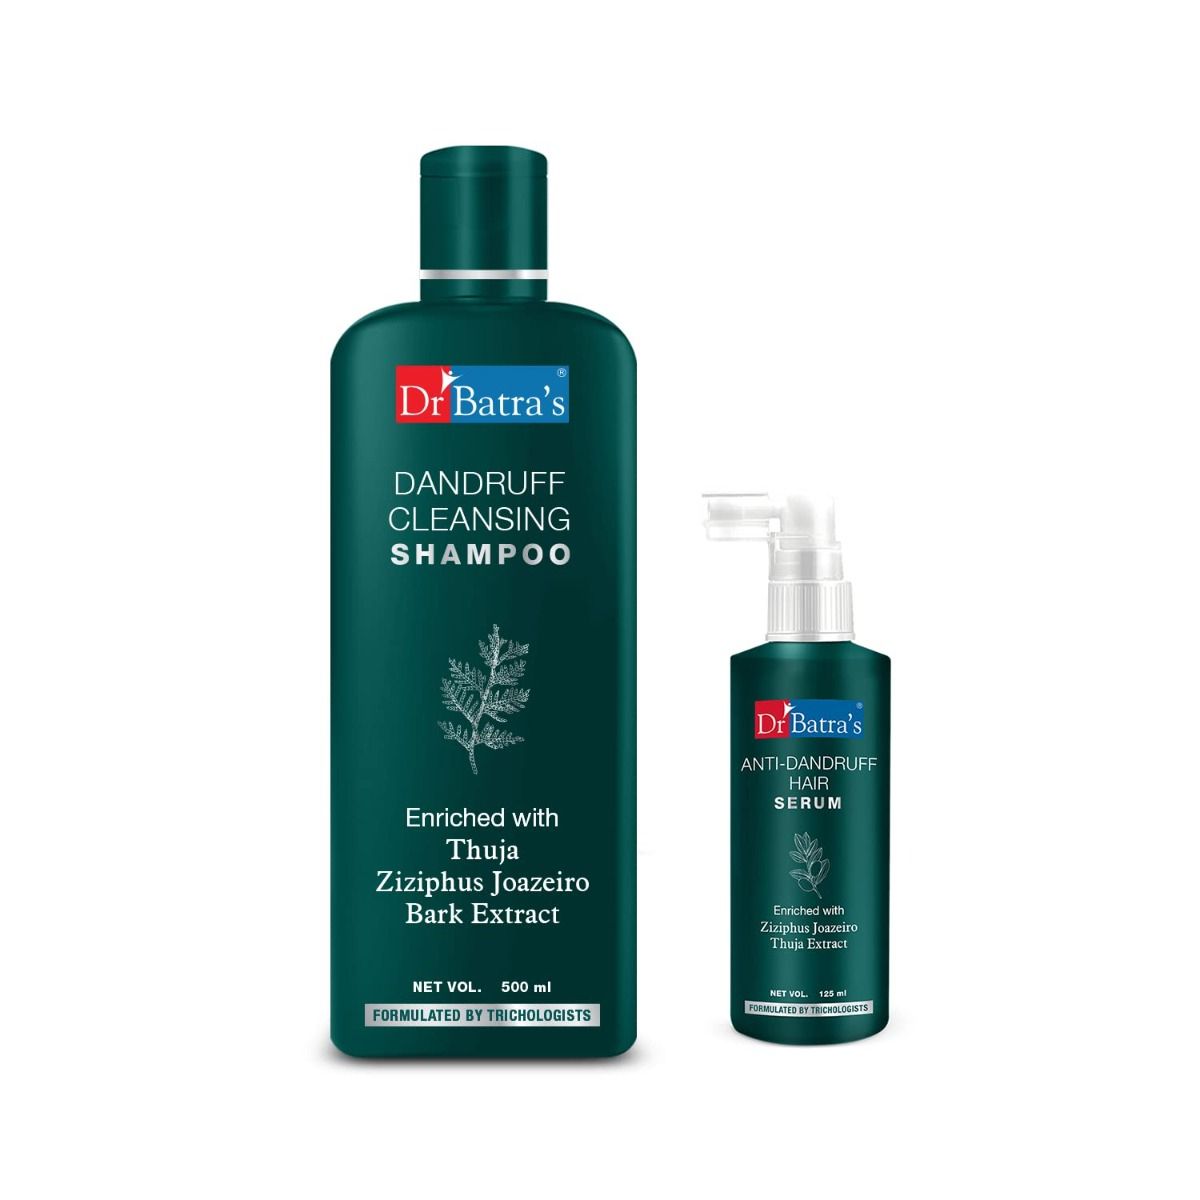     			Dr Batra's Anti Dandruff Hair Serum and Dandruff Cleansing Shampoo - 500 ml (Pack of 2)